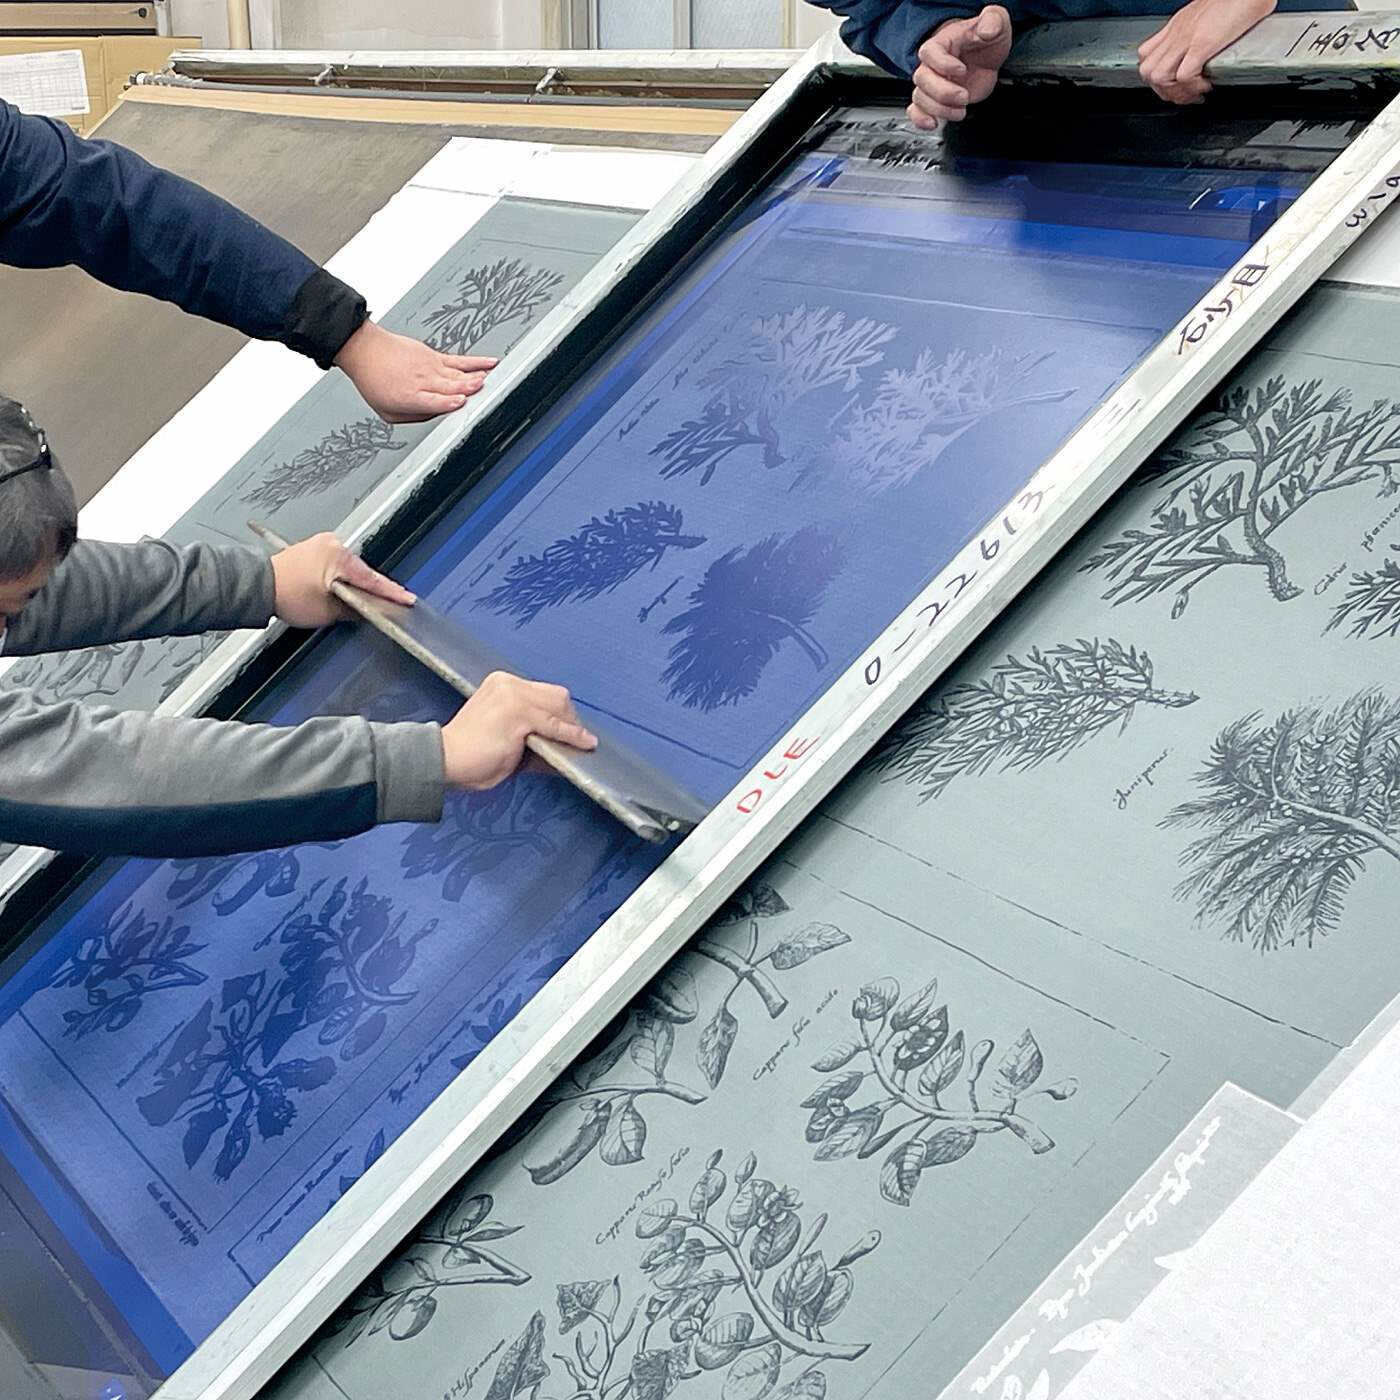 Real Stock|el:ment　ヴィンテージ植物画の世界を日常に　コットン100％ダブルガーゼのふんわりギャザーロングスカート〈チャコールグレー〉|見本は傾斜台で手刷り。集中力と細やかな技術が必要とされます。